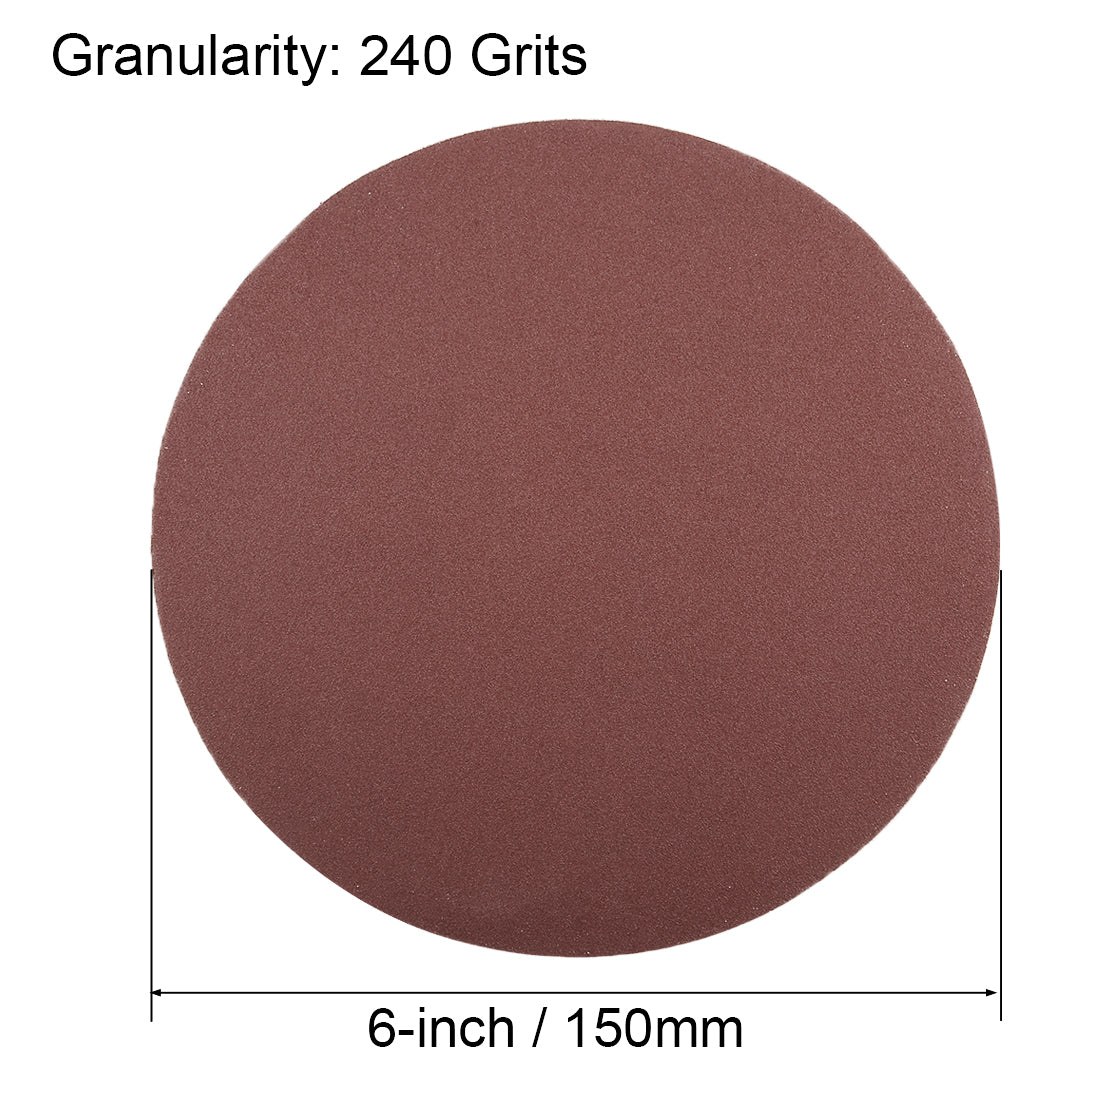 uxcell Uxcell 6-inch 240-Grits PSA Sanding Disc, Adhesive-Backed Sanding Sheets Aluminum Oxide Sandpaper for Random Orbital Sander 20pcs